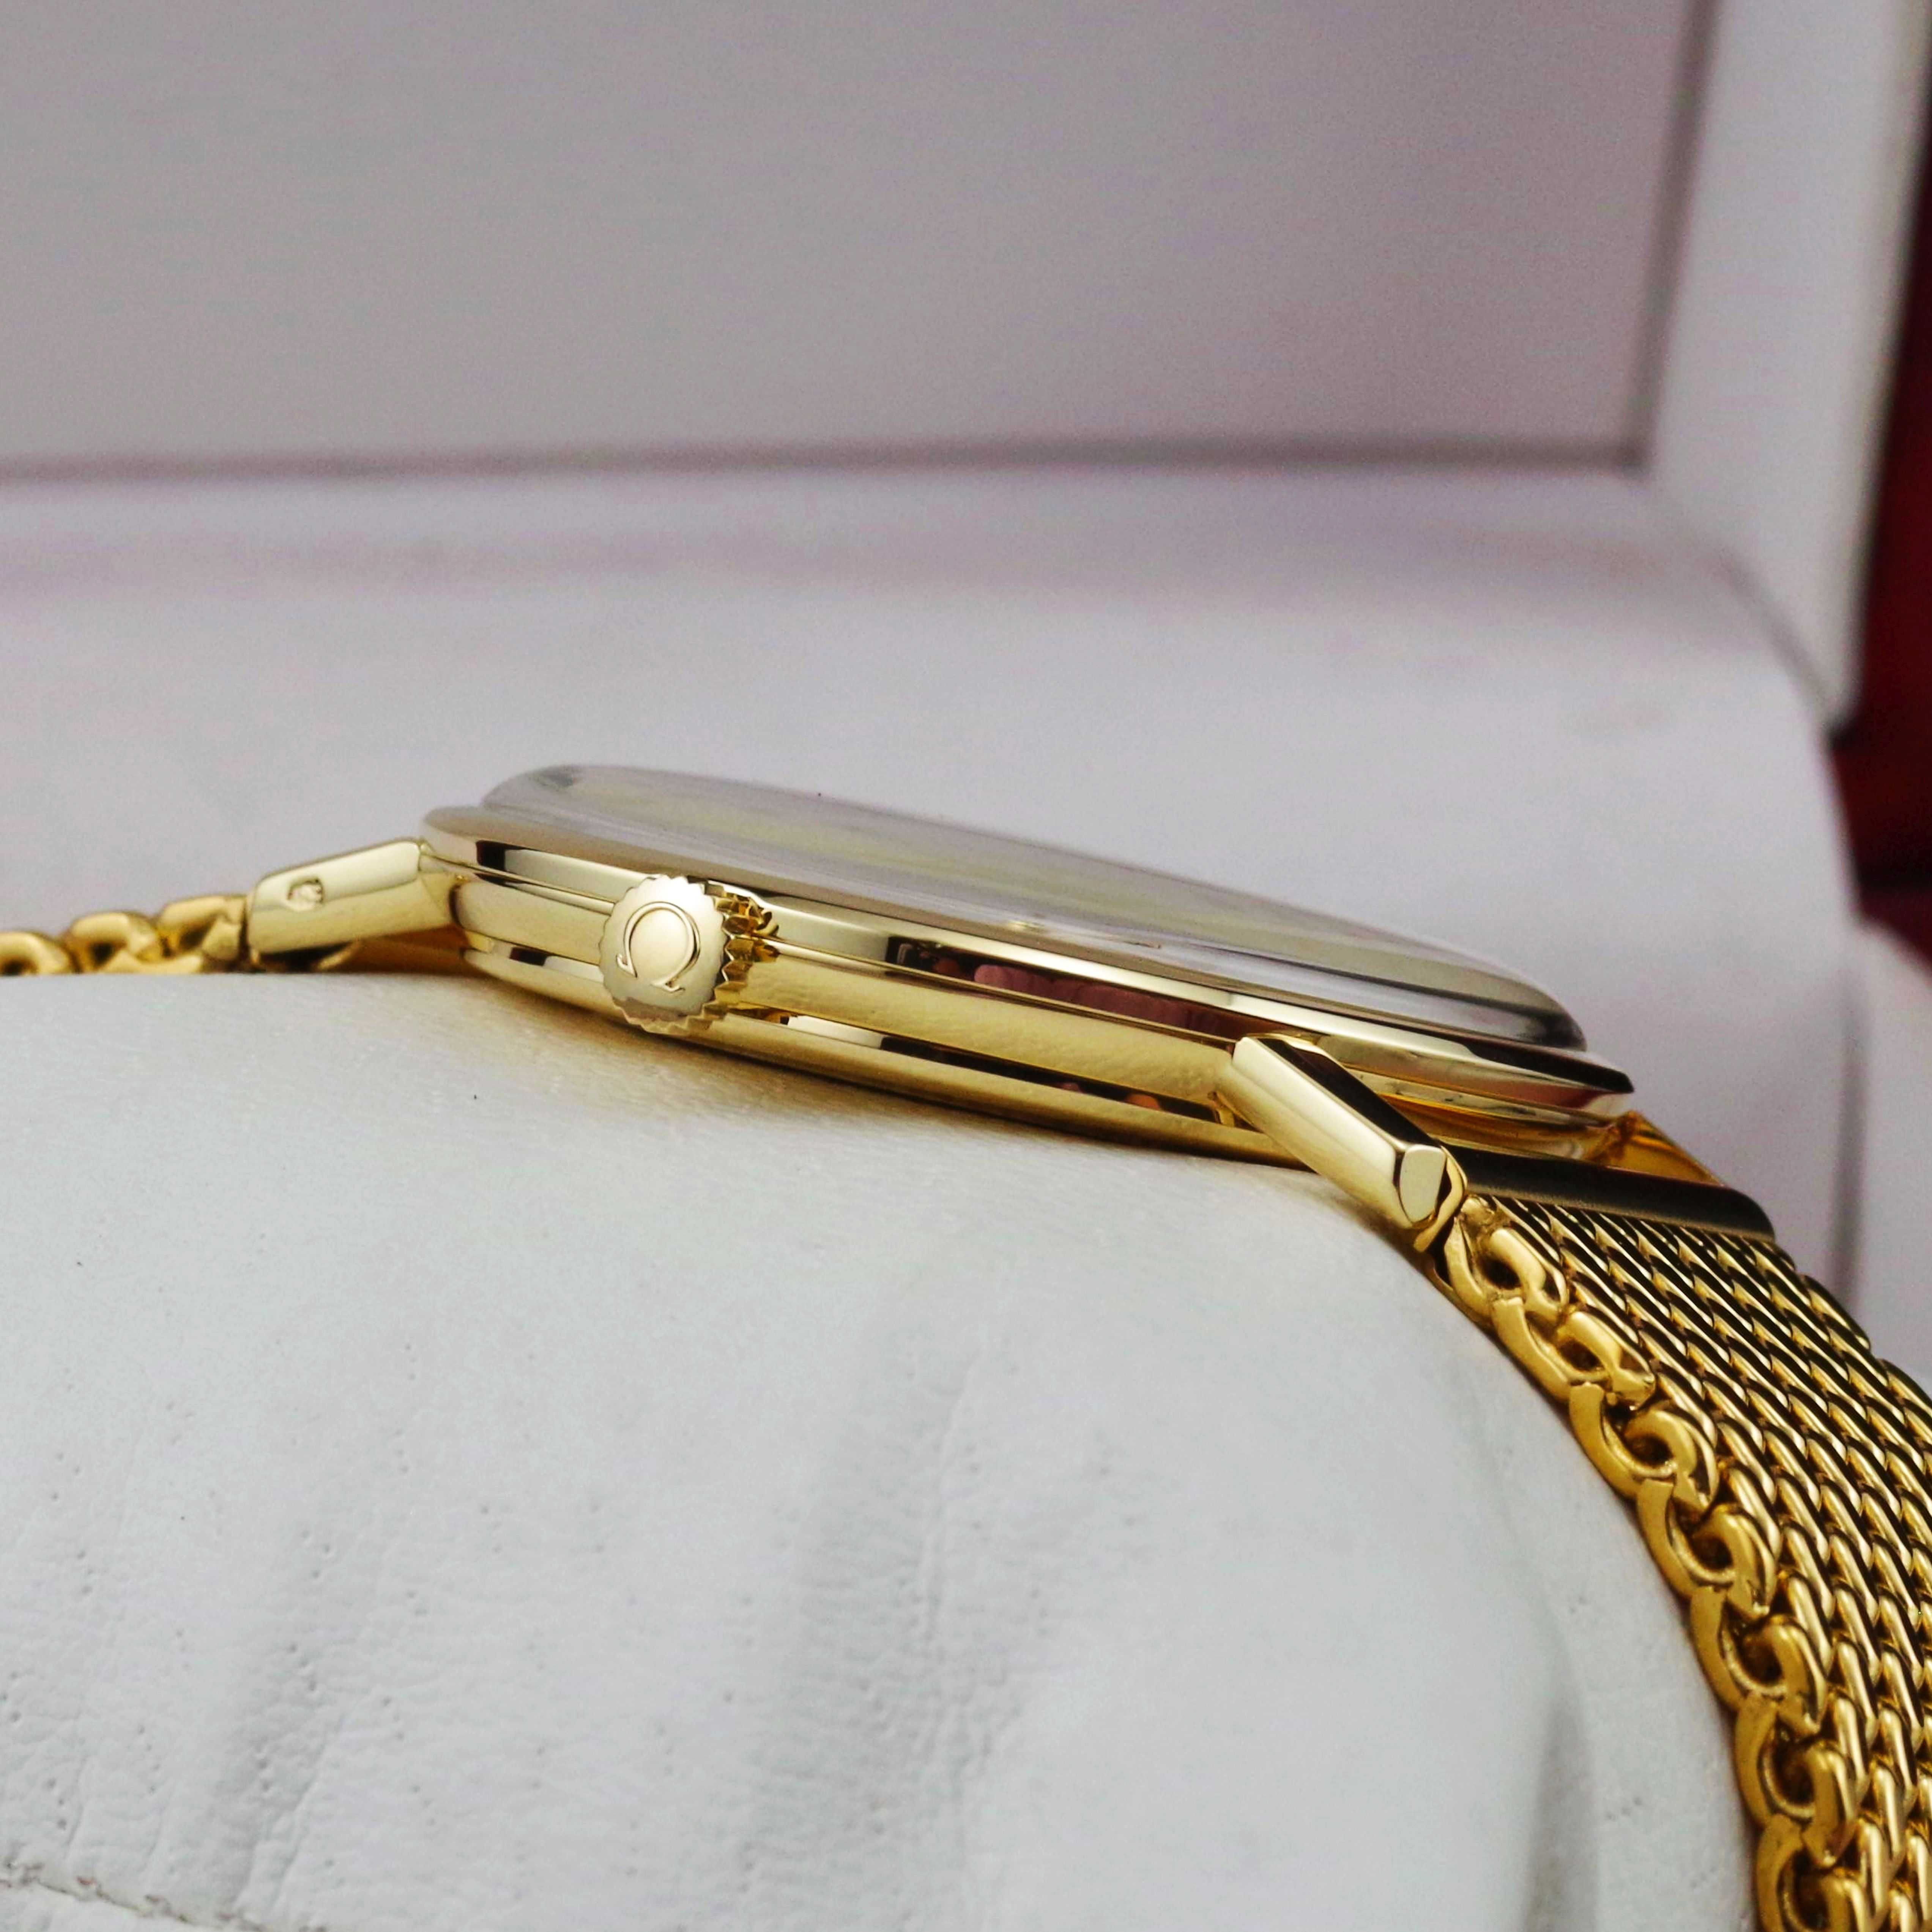 OMEGA zegarek męski vintage 1967 LITE złoto 14K / 585 kaliber 601